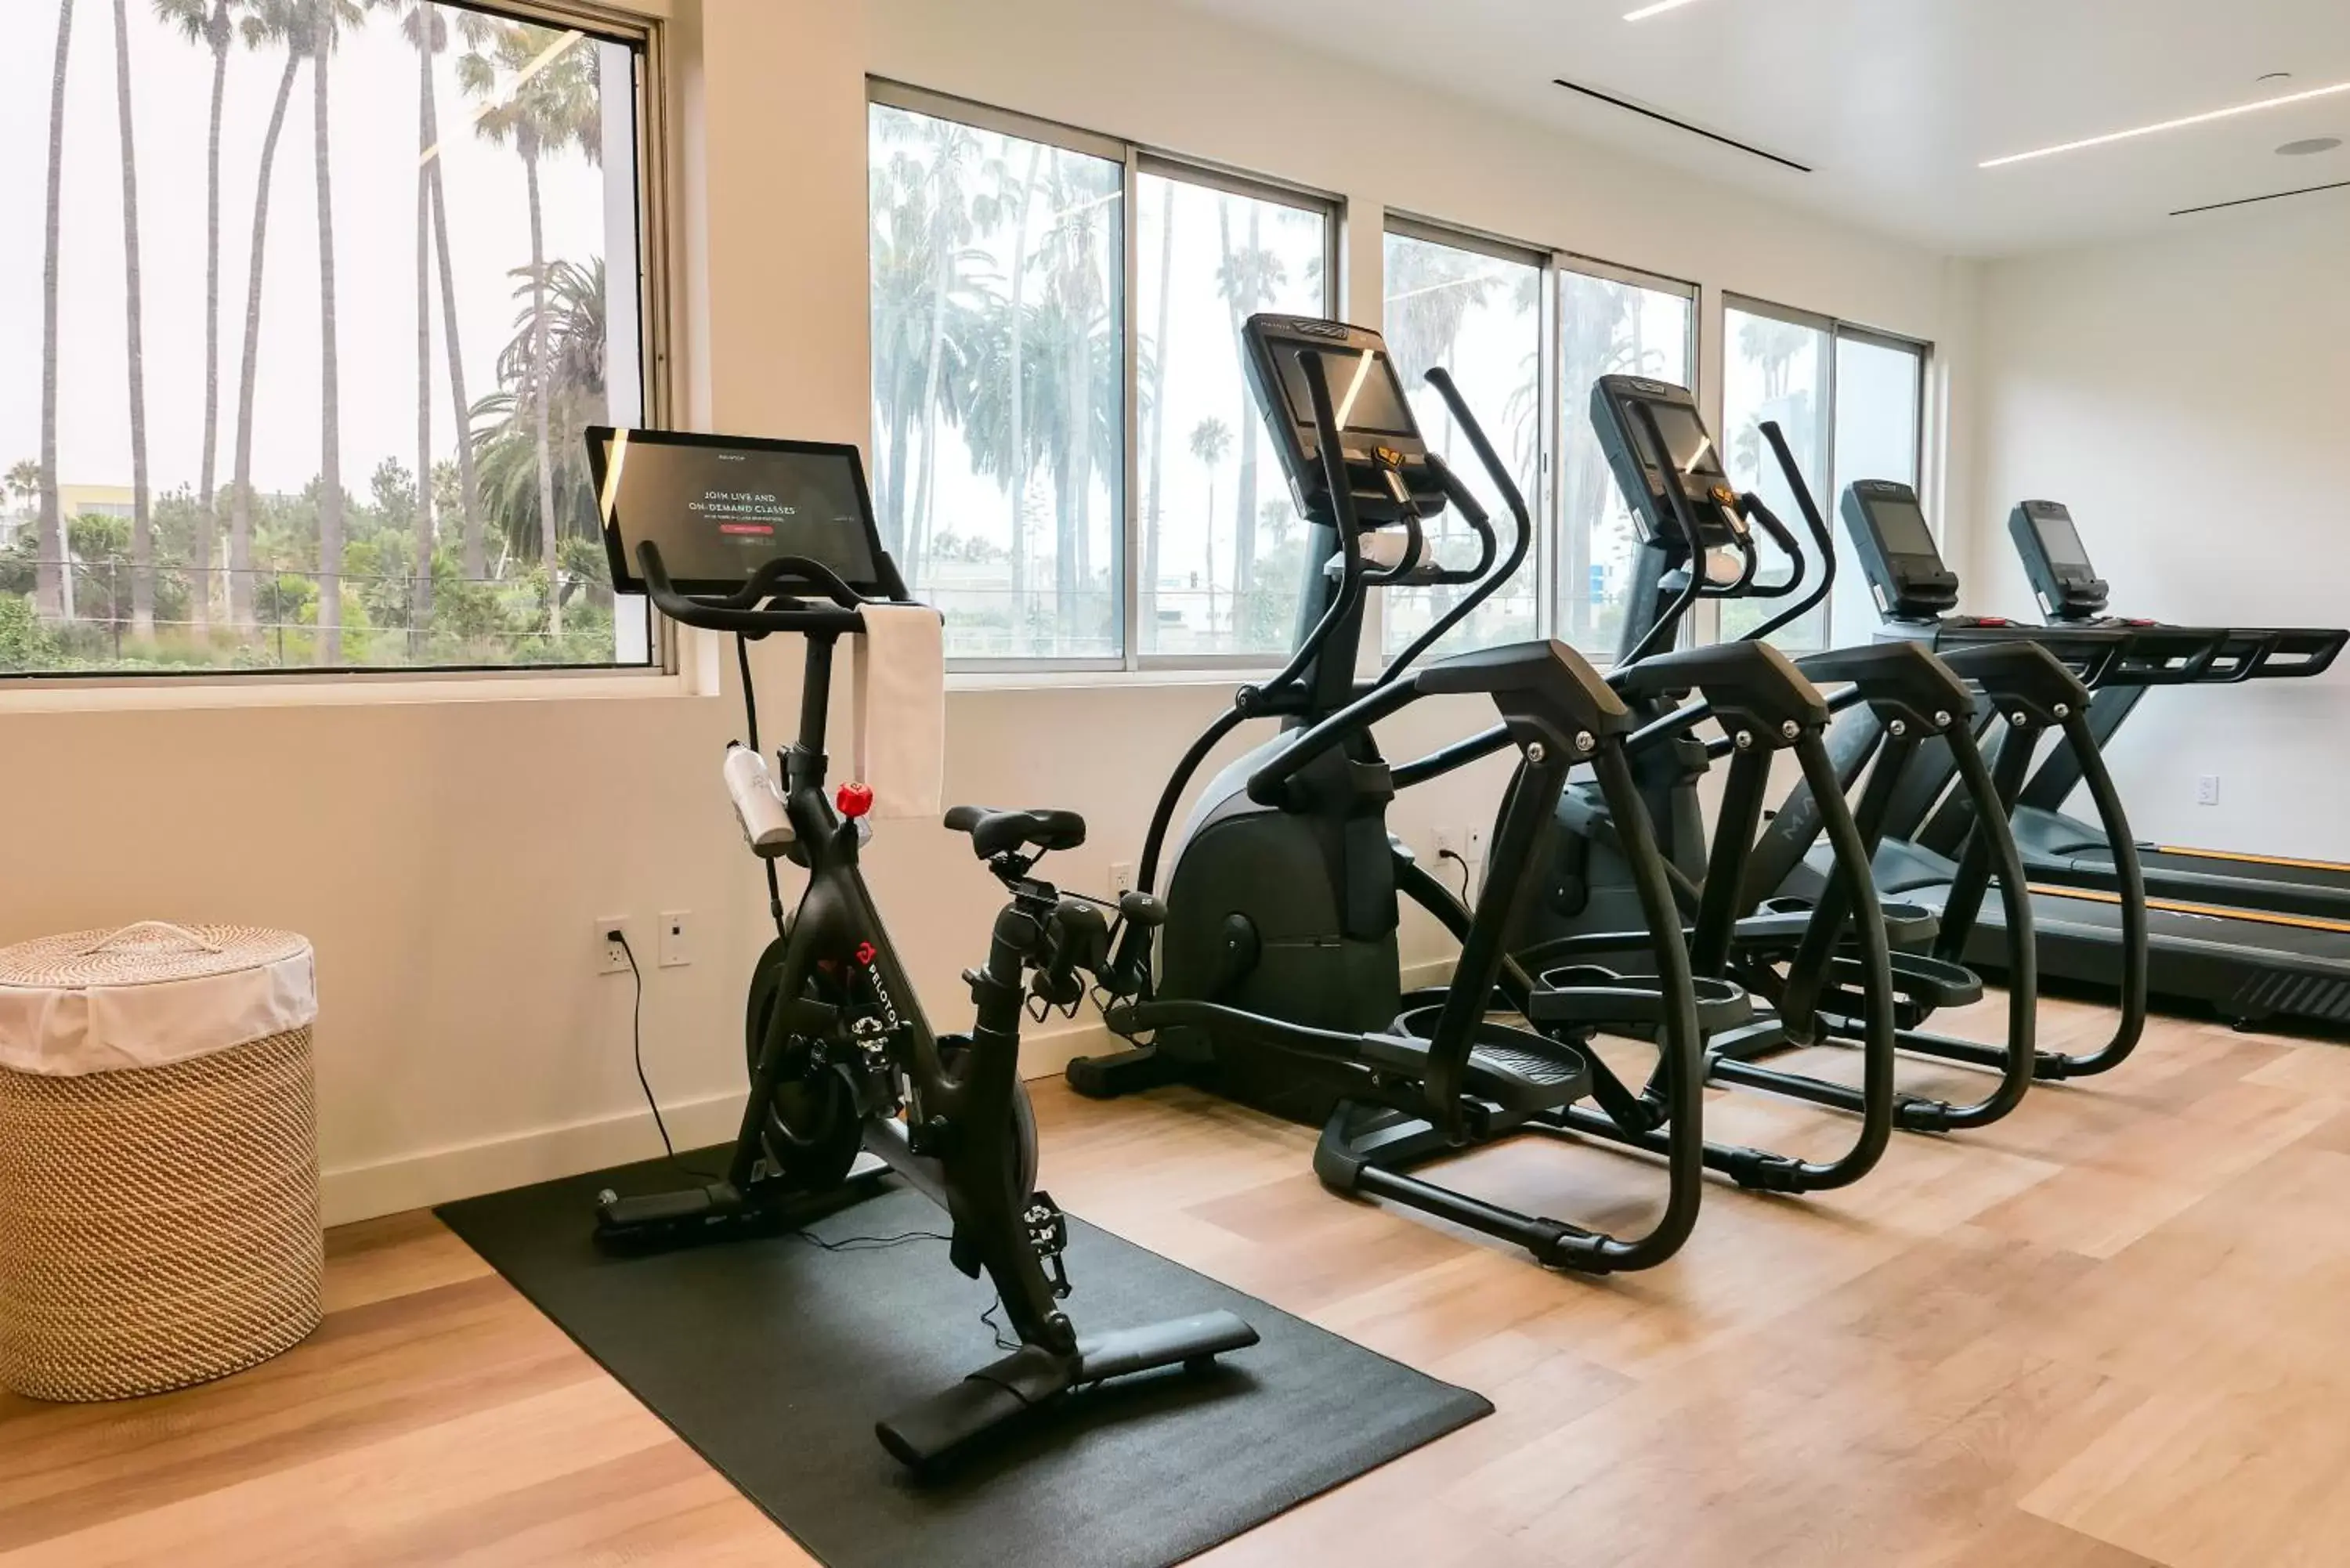 Fitness centre/facilities, Fitness Center/Facilities in The Pierside Santa Monica